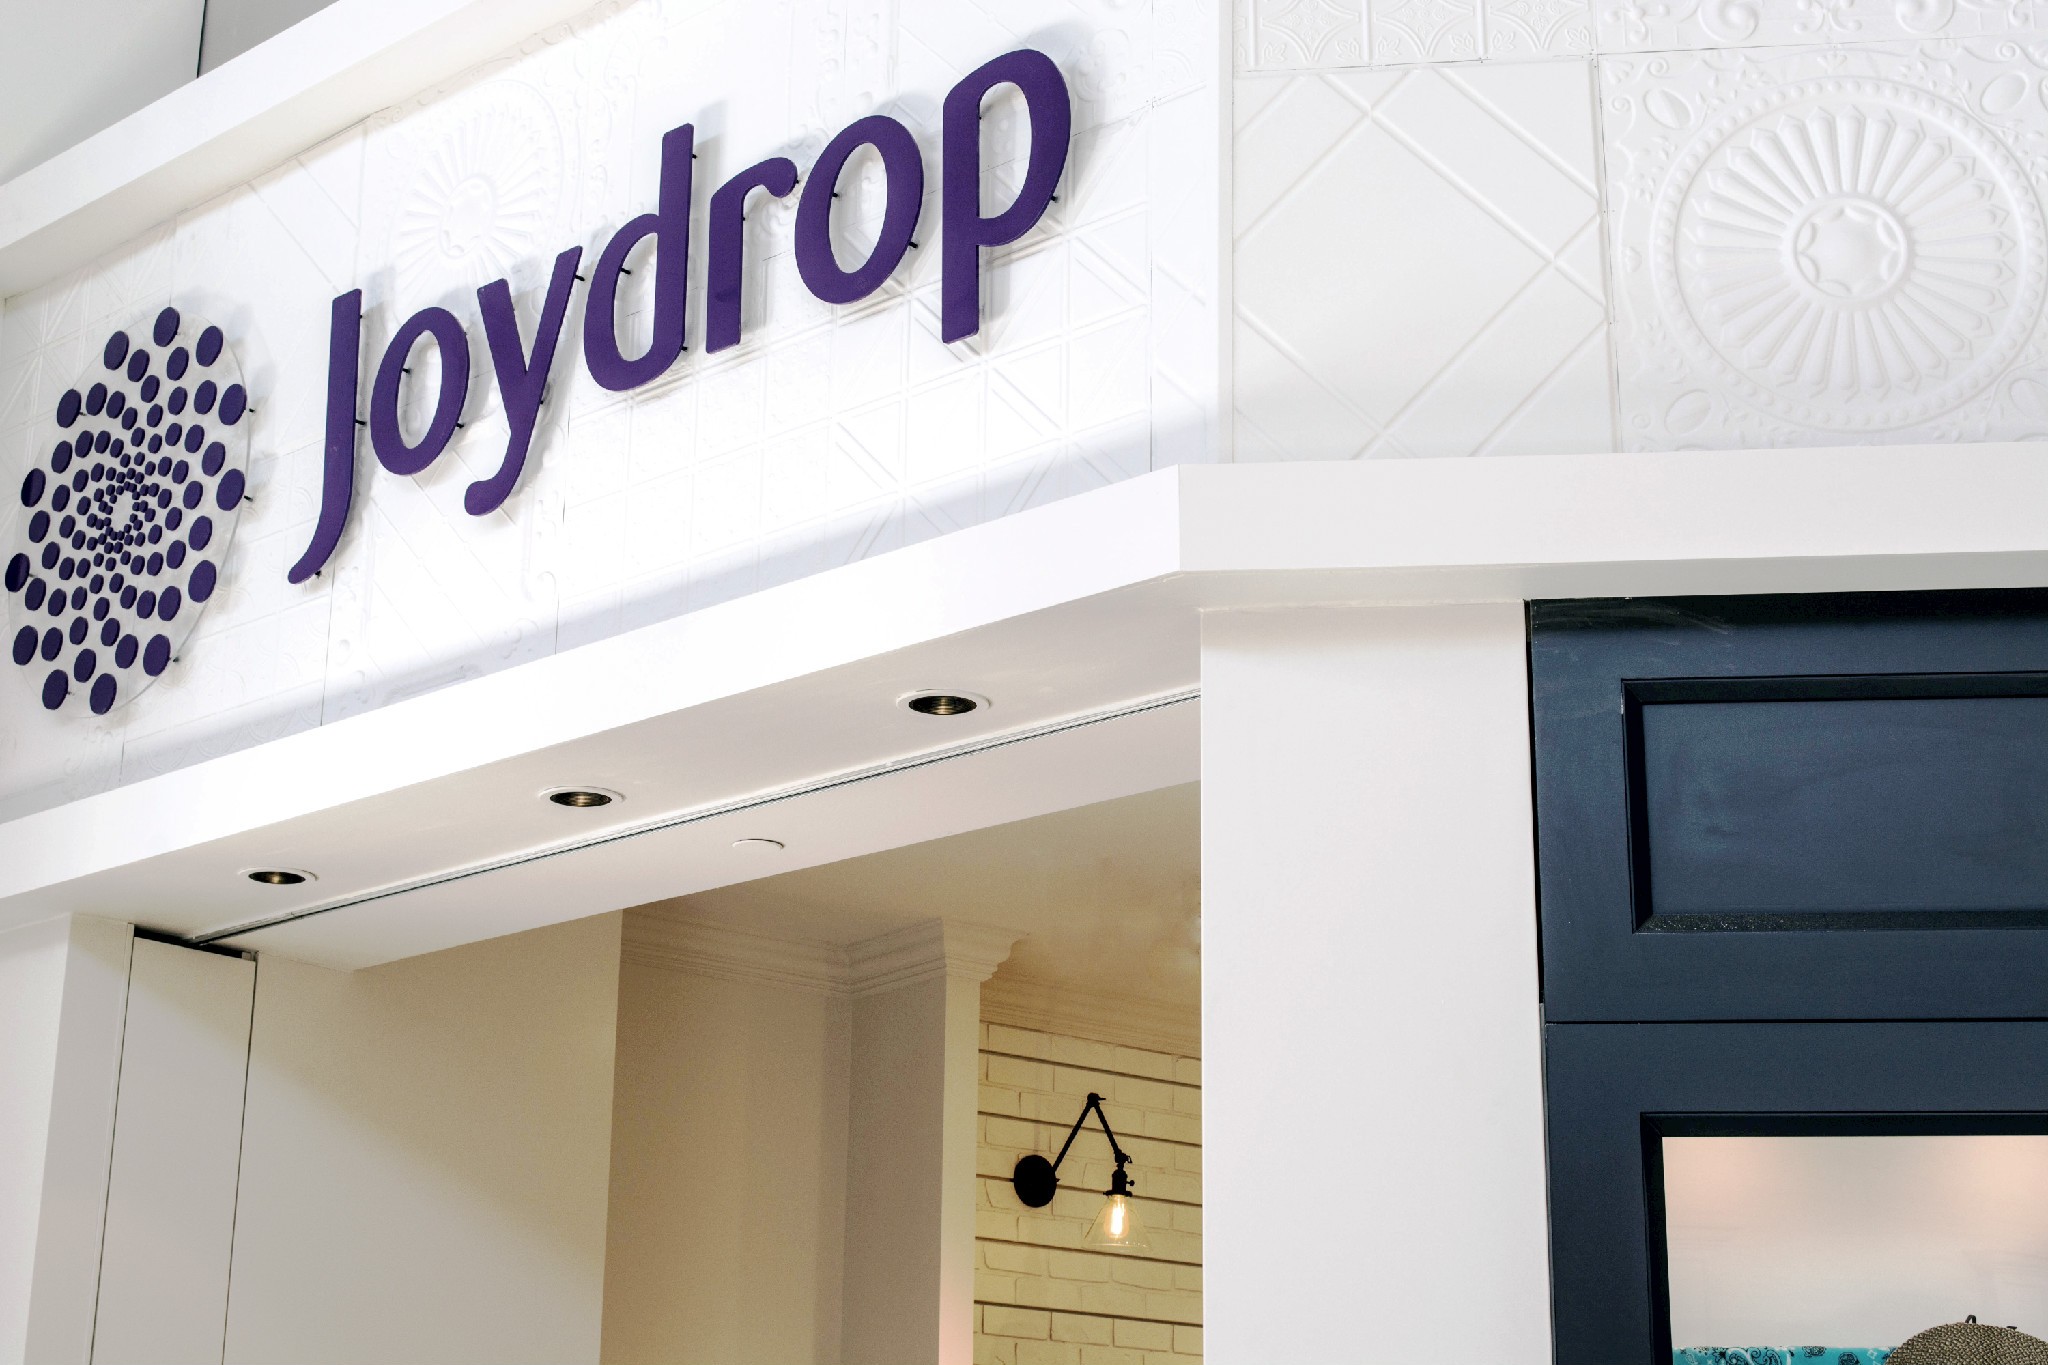 Joydrop in Calgary Alberta Retail Interior Design Storefront Branding by Cutler